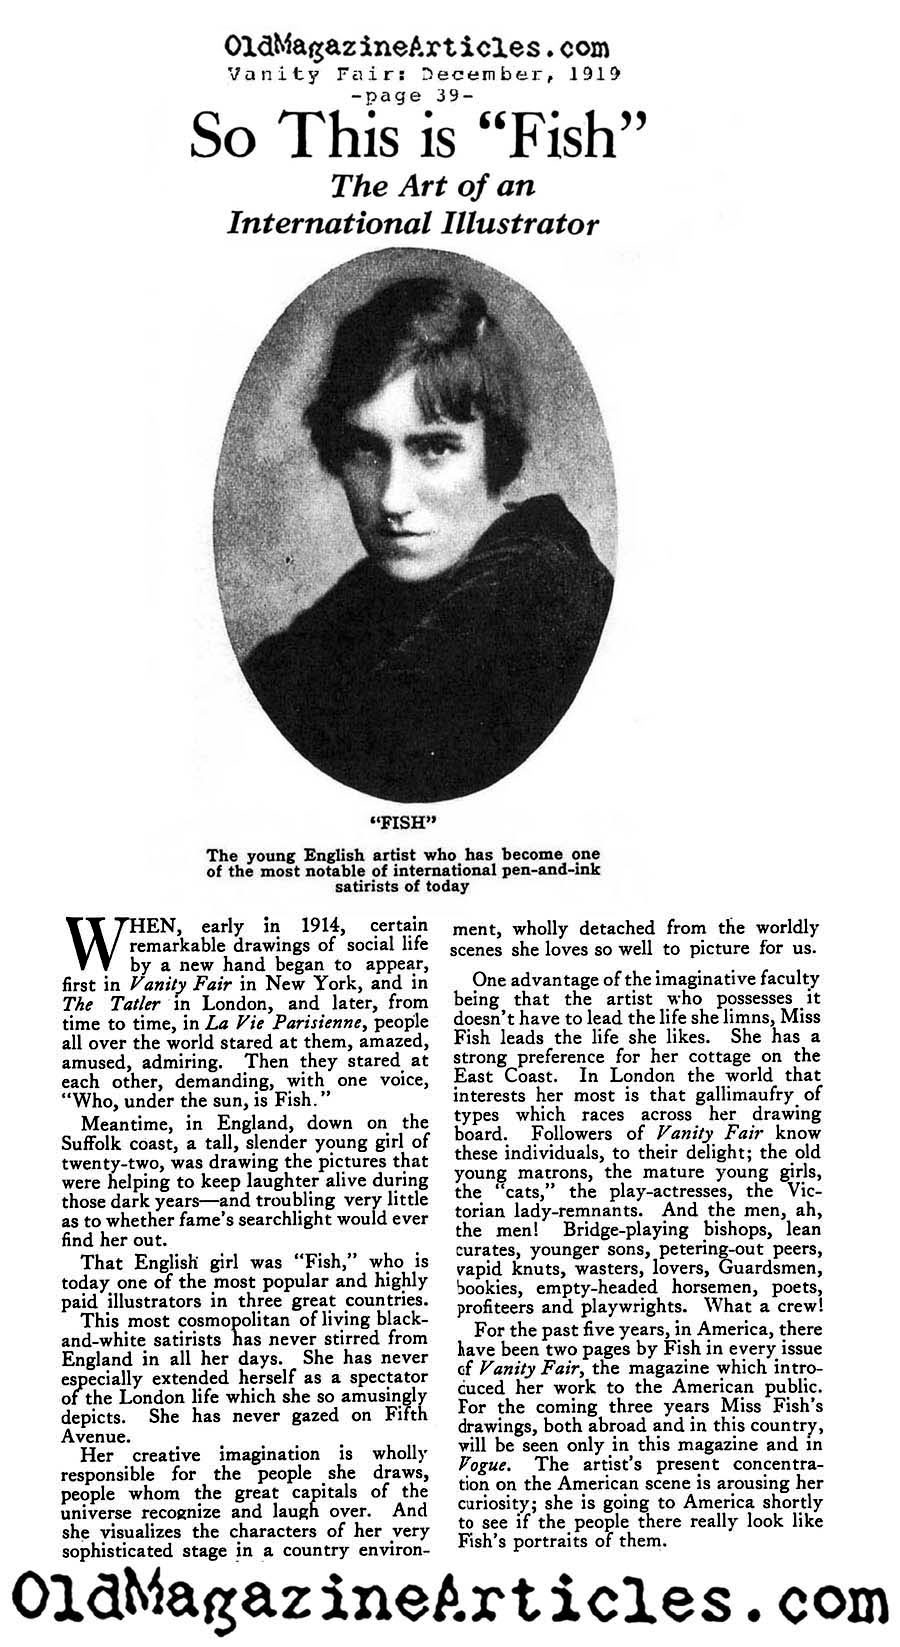  Meet Ann Fish: Conde Nast Illustrator (Vanity Fair, 1919)